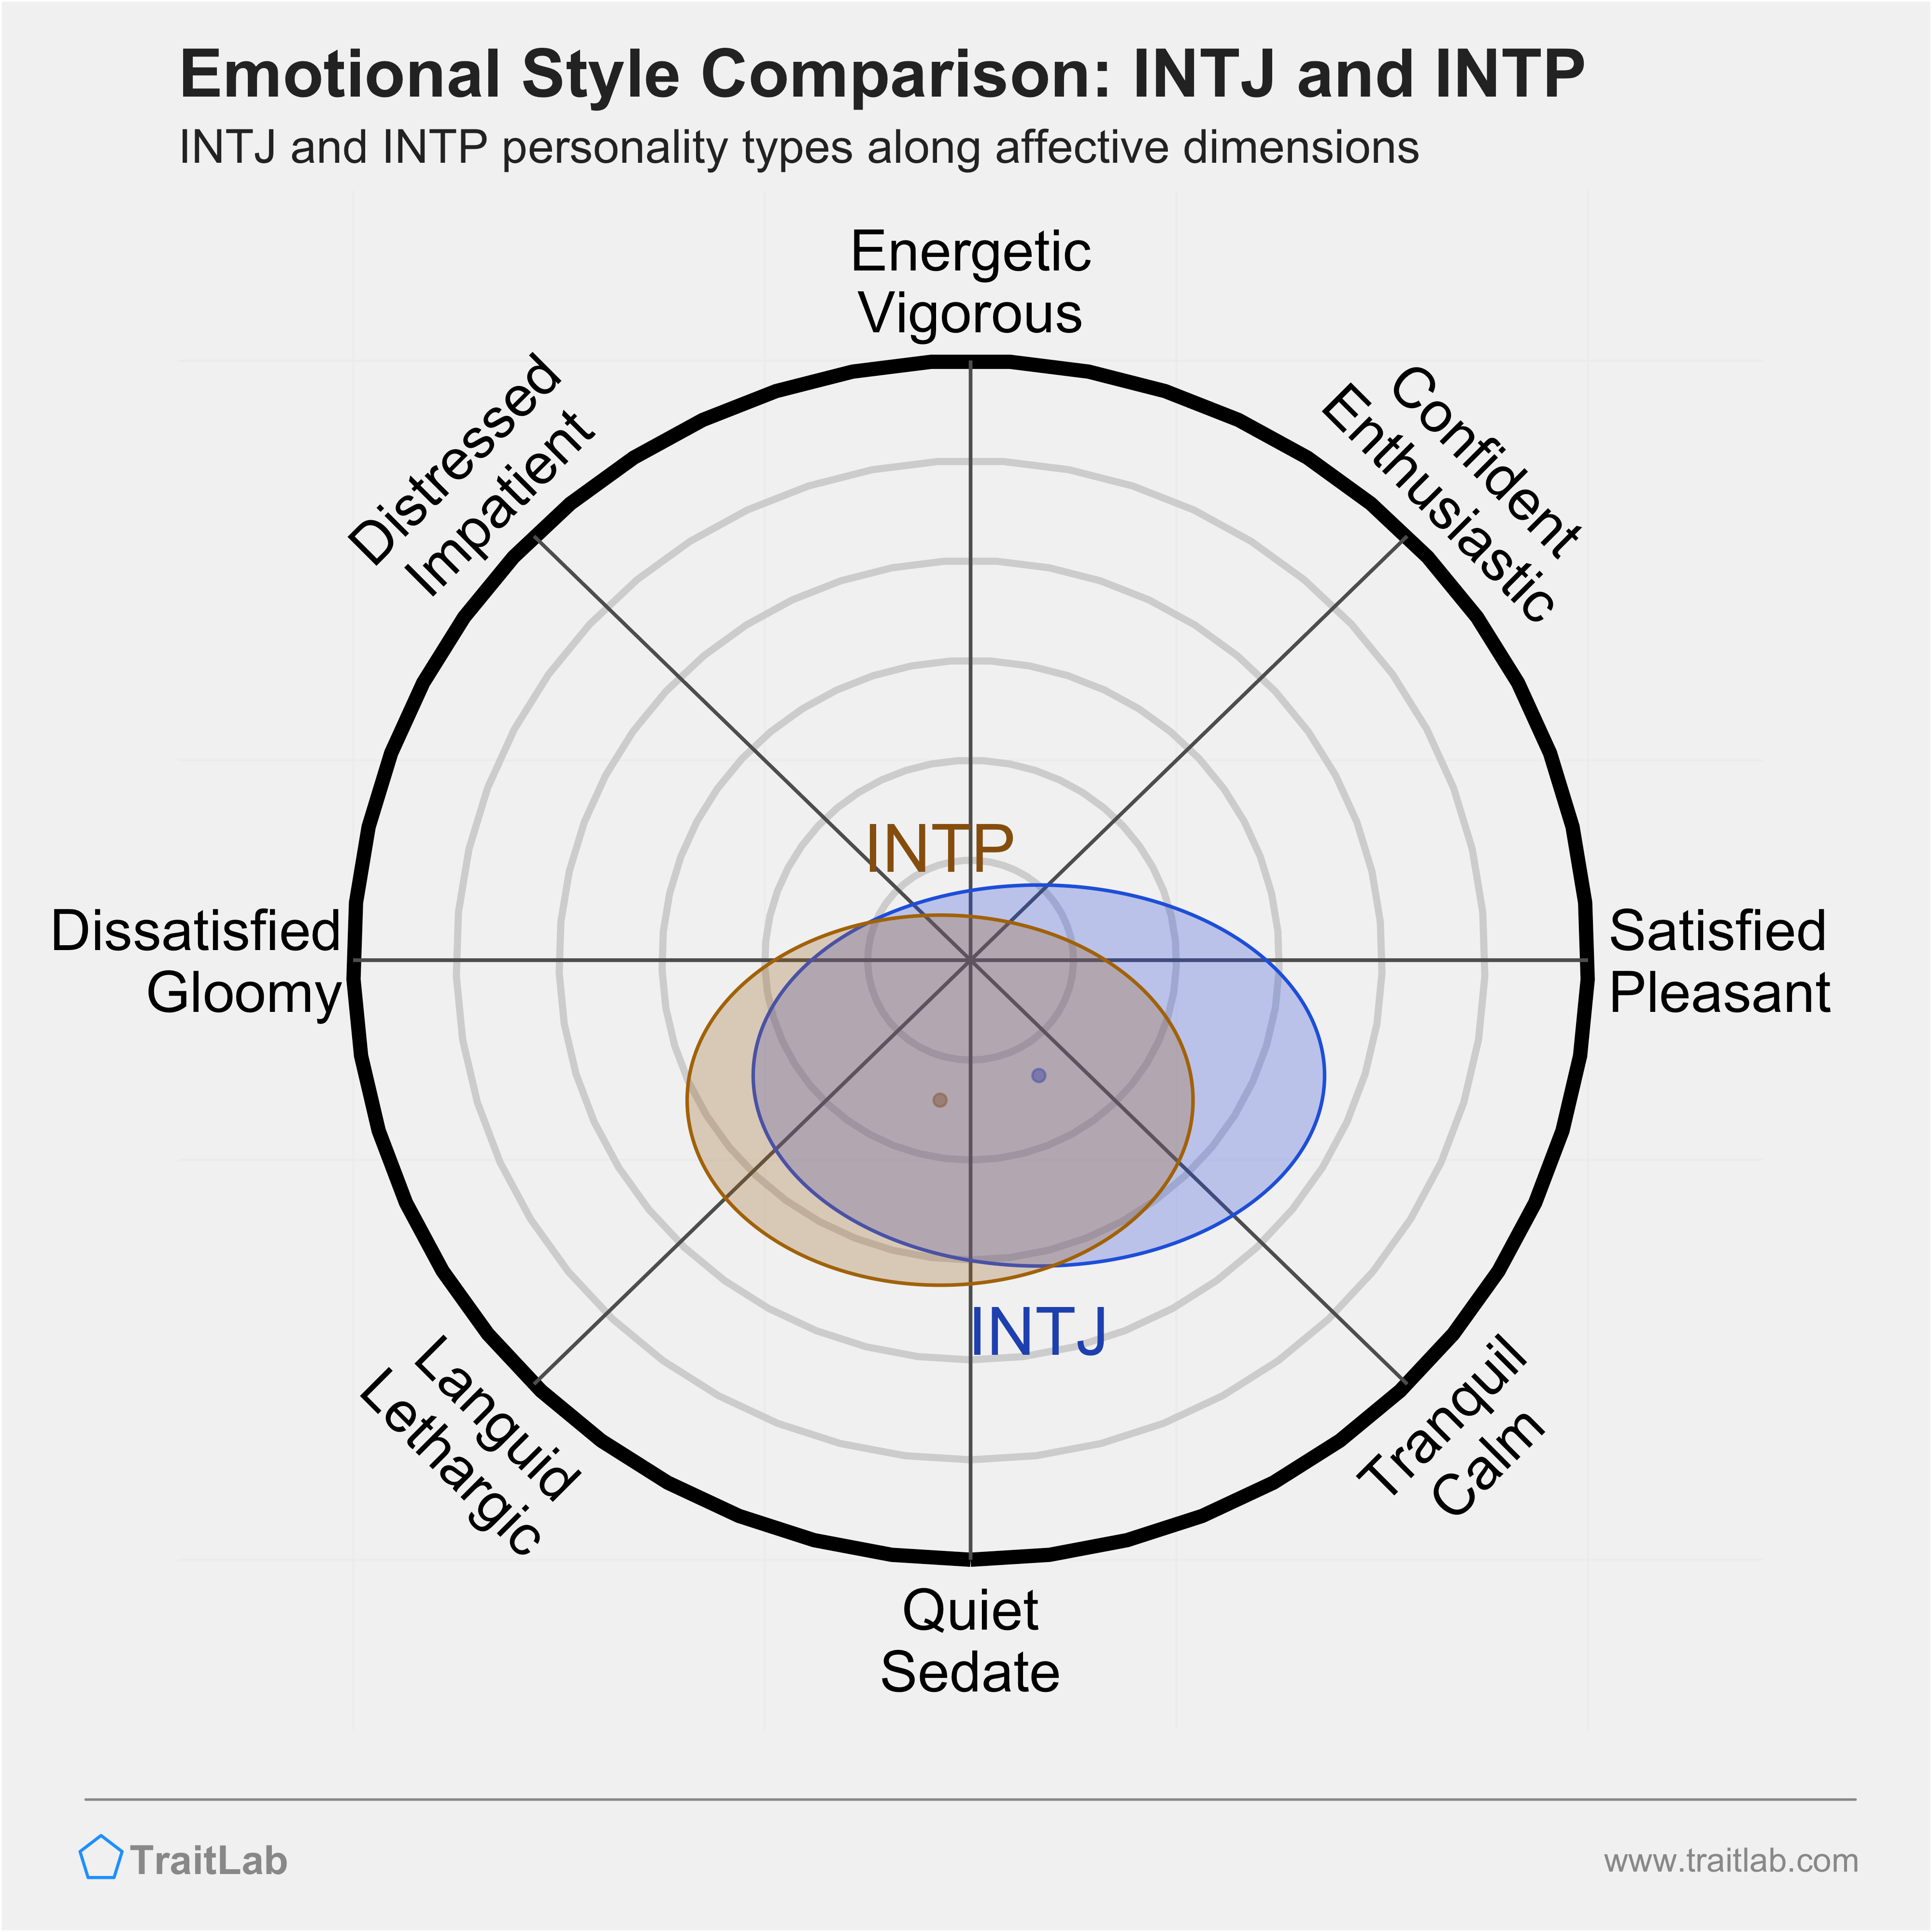 INTJ and INTP comparison across emotional (affective) dimensions